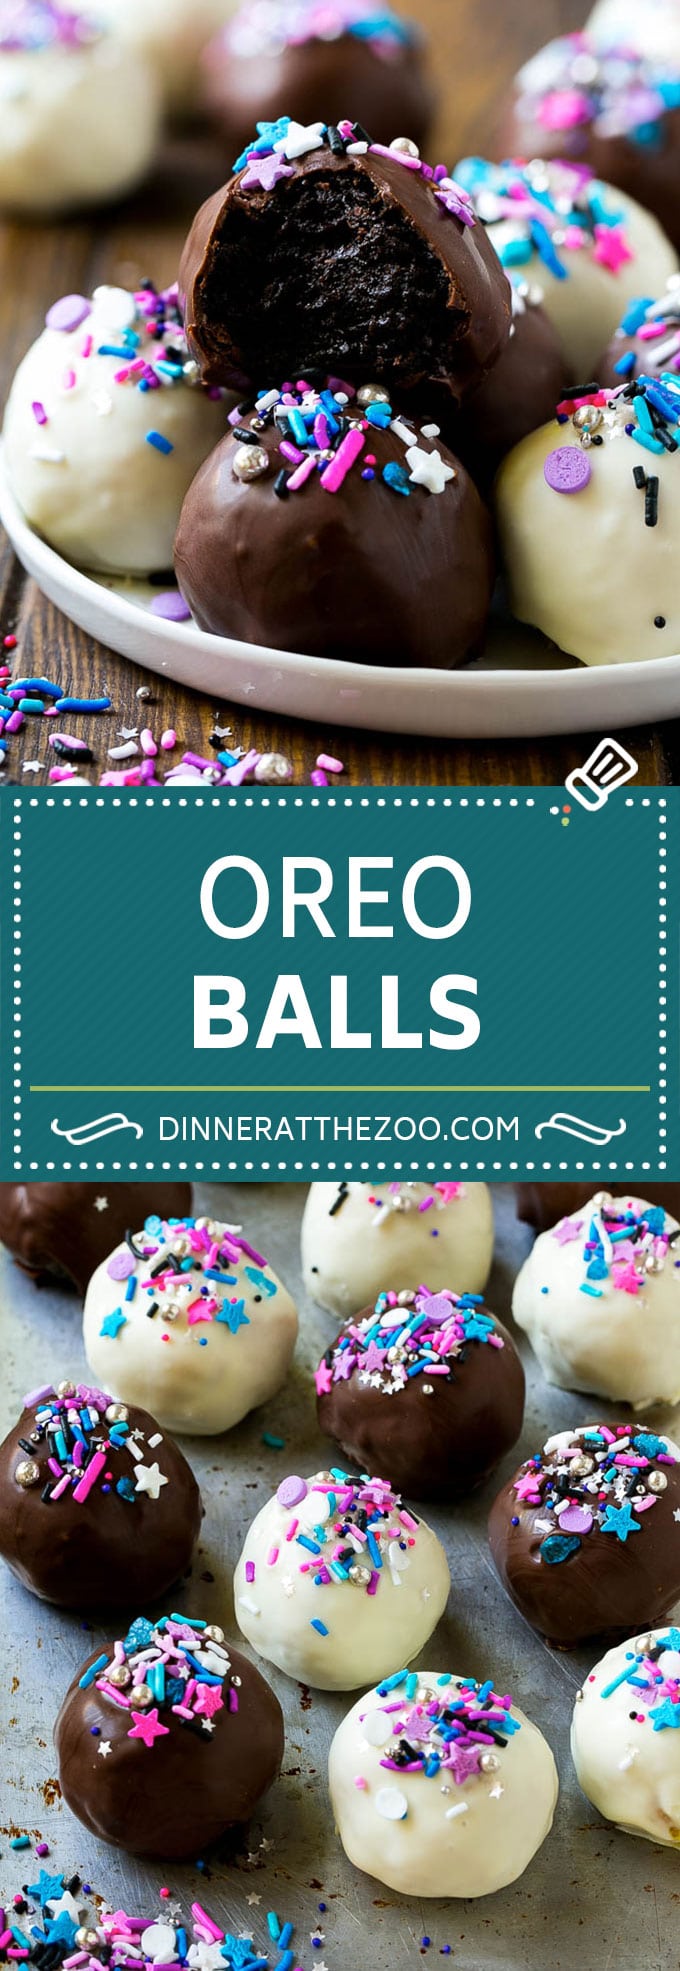 Oreo Balls Recipe | Oreo Truffles | Homemade Candy #truffles #candy #oreos #chocolate #sprinkles #dessert #christmas #dinneratthezoo